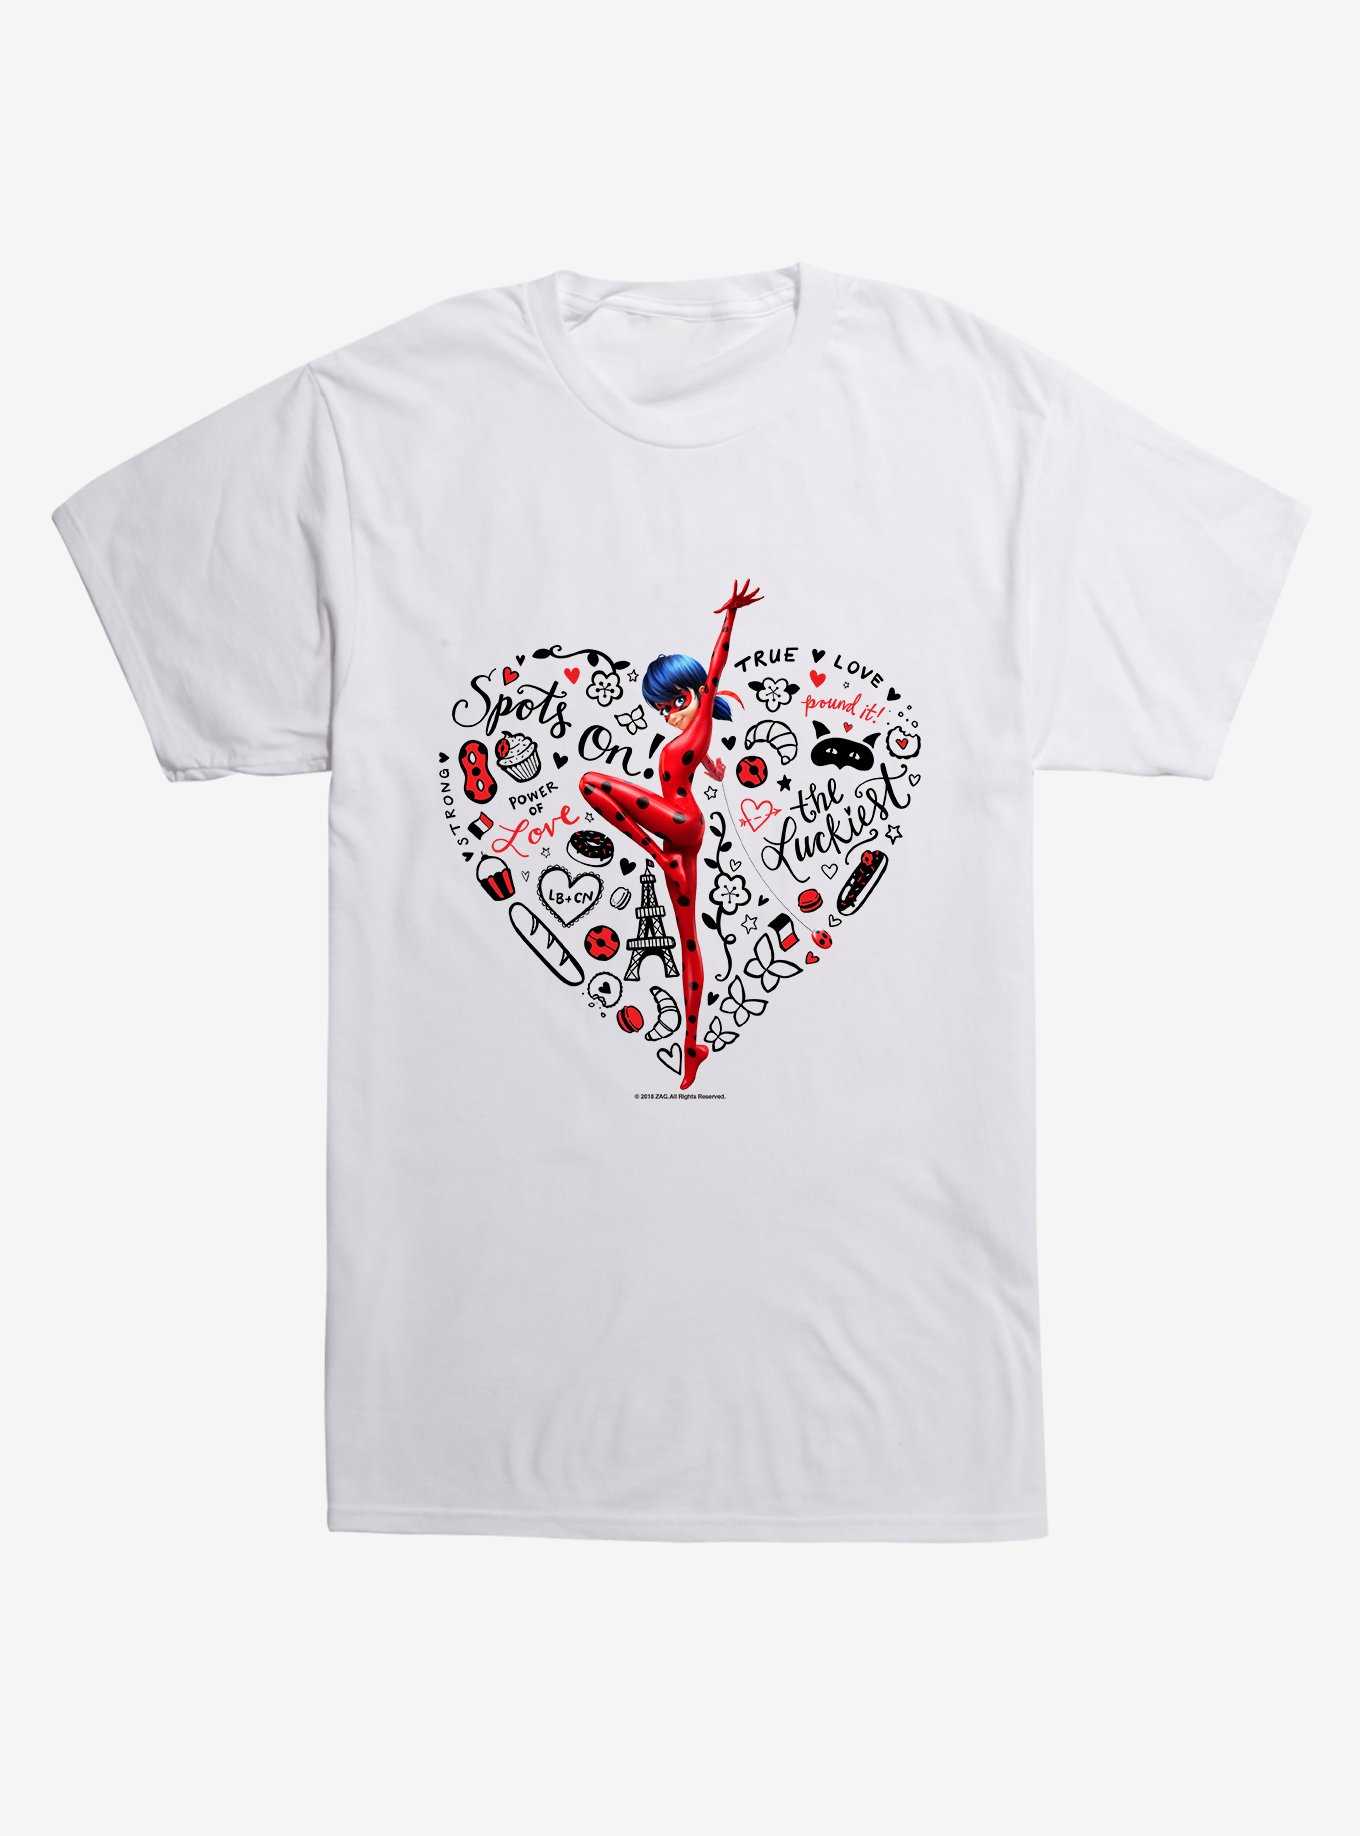 Miraculous: Tales of Ladybug & Cat Noir Ladybug Heart Collage T-Shirt, , hi-res